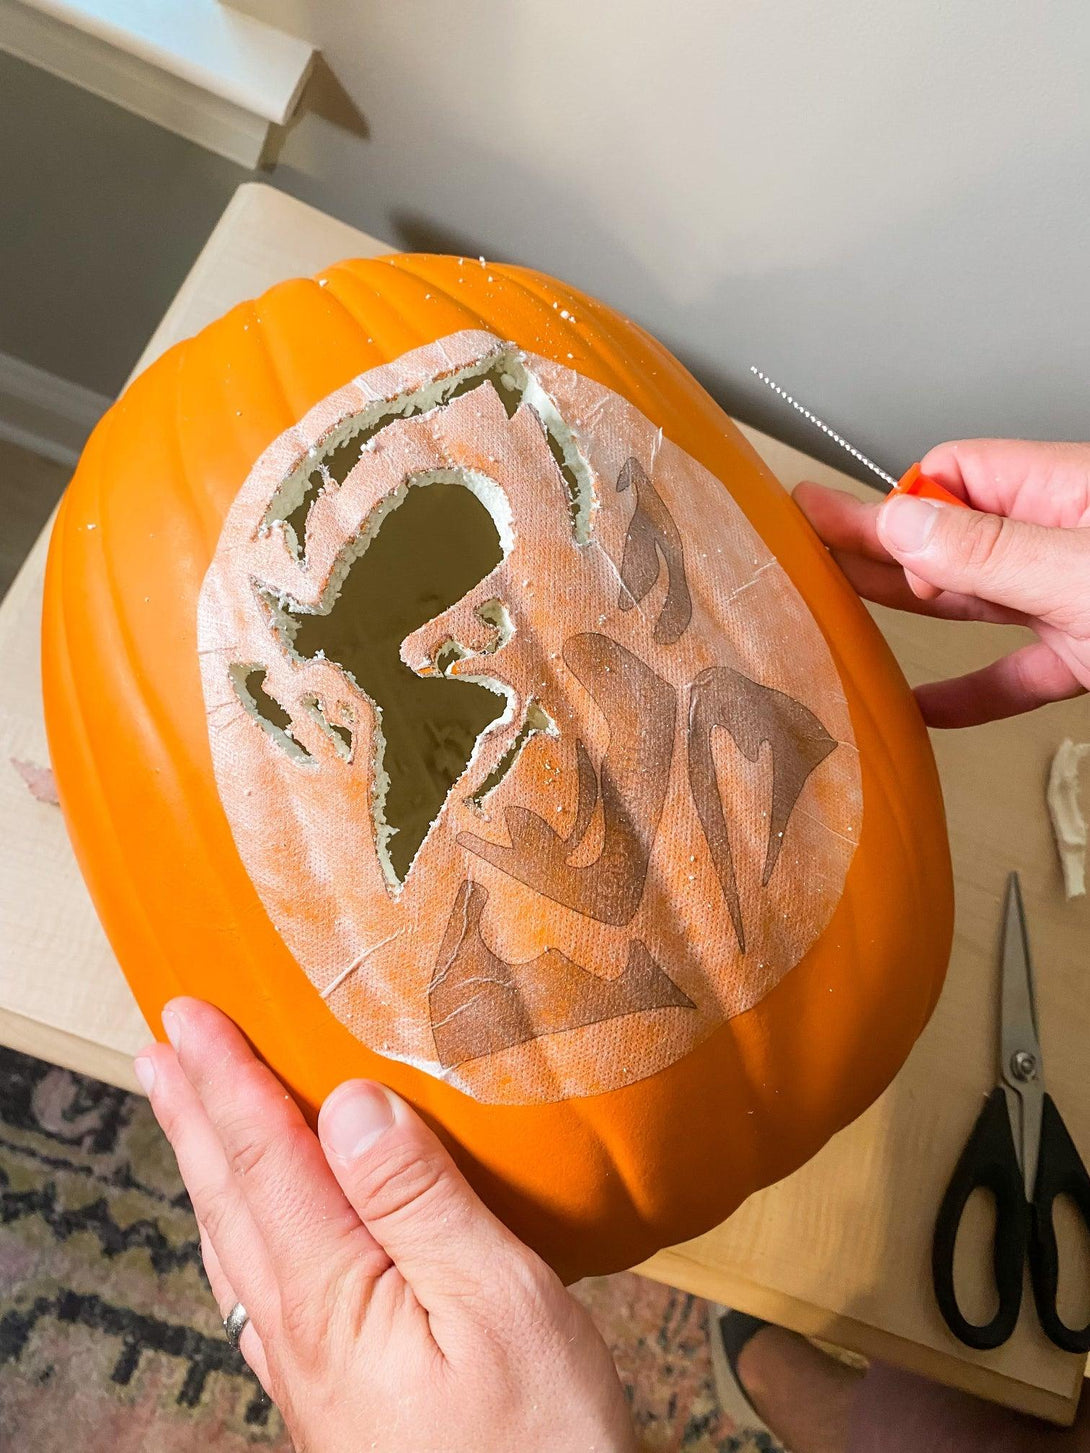 Frankenstein Face Pumpkin Carving Stencil - Pumpkin HQ